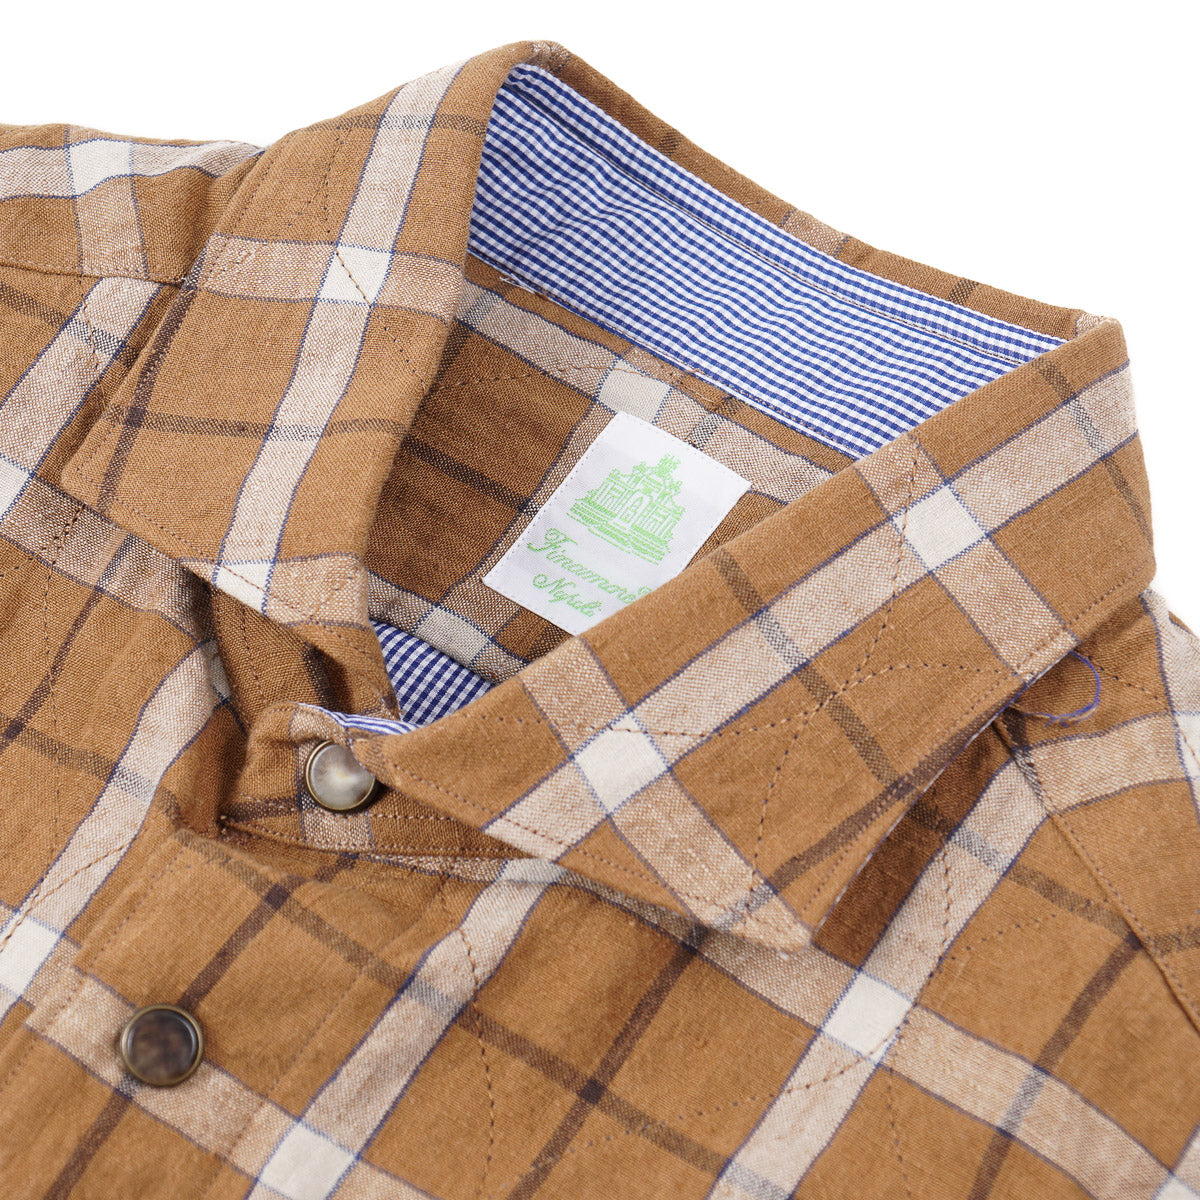 Finamore Quilted Linen Shirt-Jacket - Top Shelf Apparel